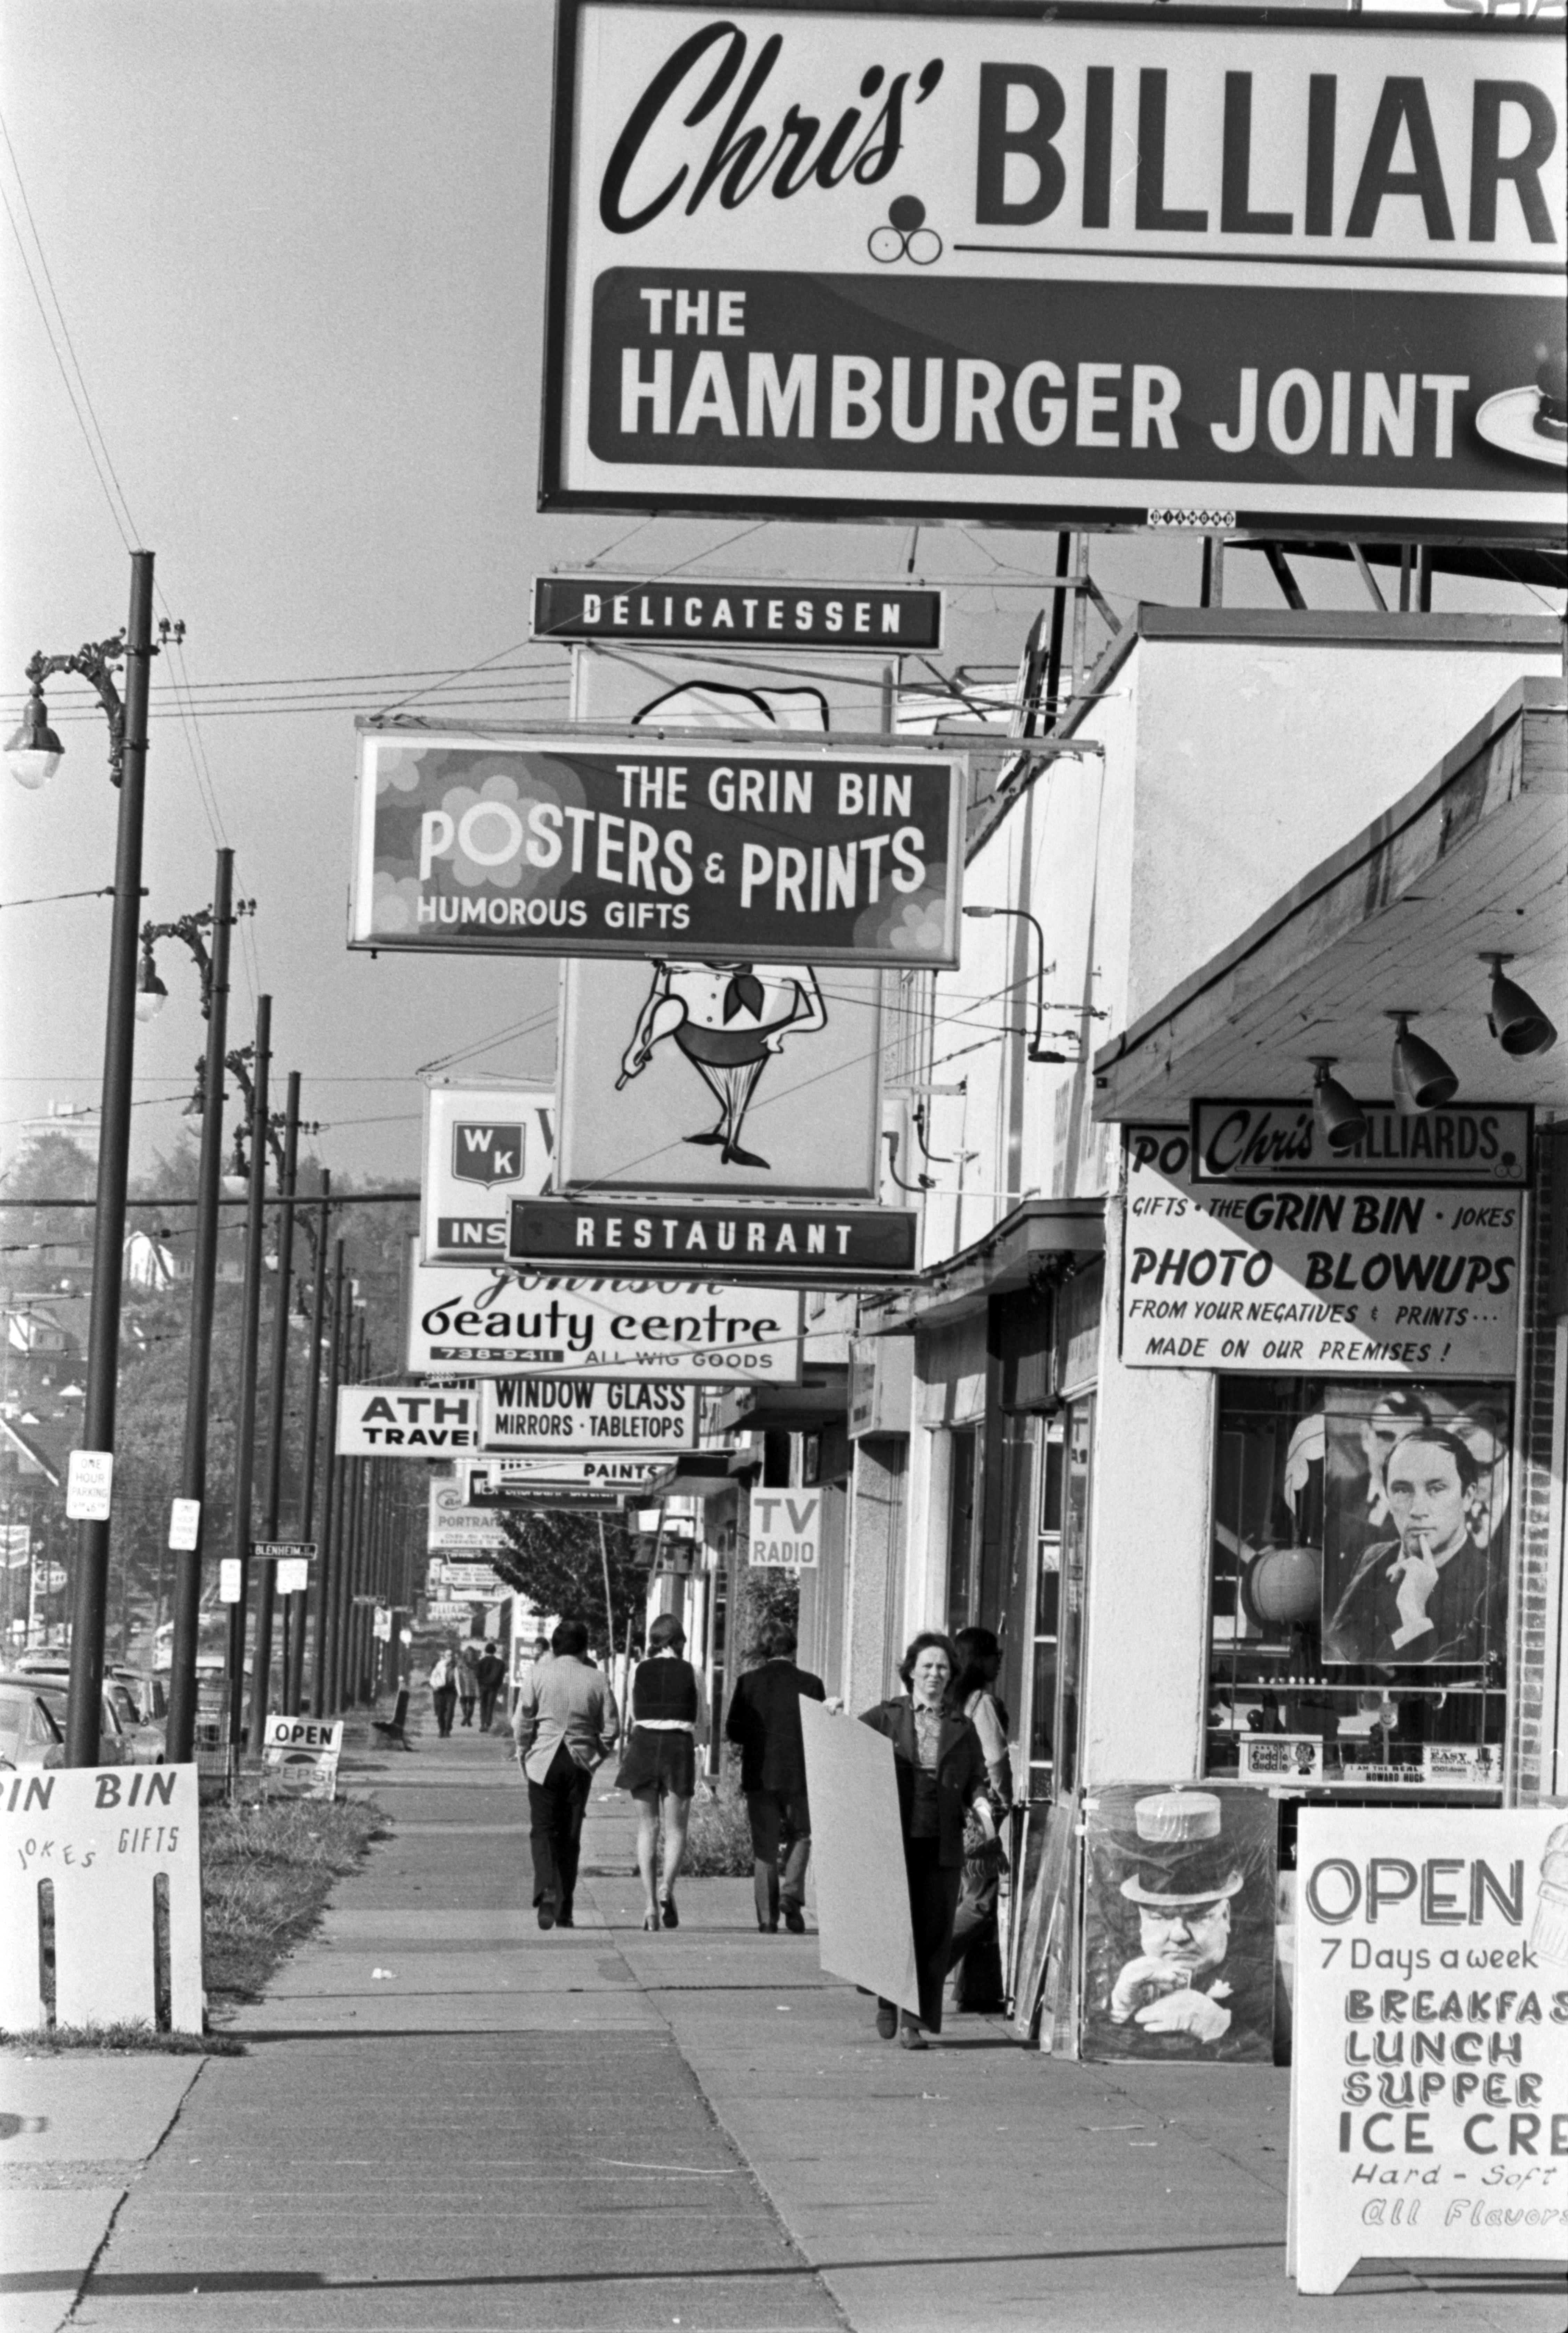 Broadway Street, between Trafalgar Street and Blenheim. The Grin Bin posters and prints, Chris’ Billiards, The Hamburger Joint. October 5, 1972. Steve Bosch/Vancouver Sun (72-3291)